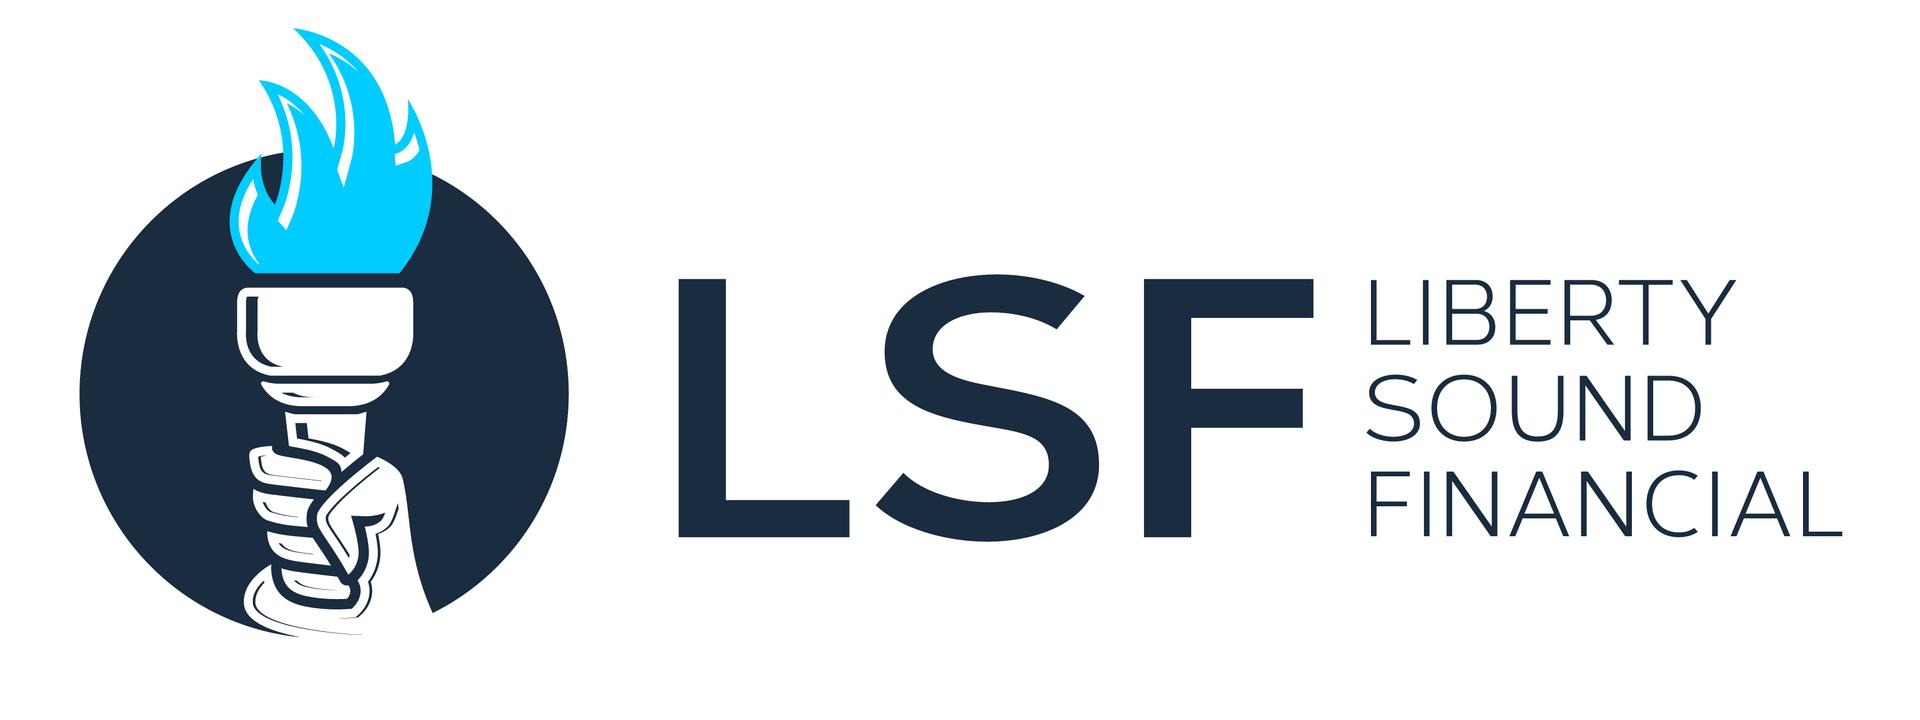 Liberty Sound Financial LLC